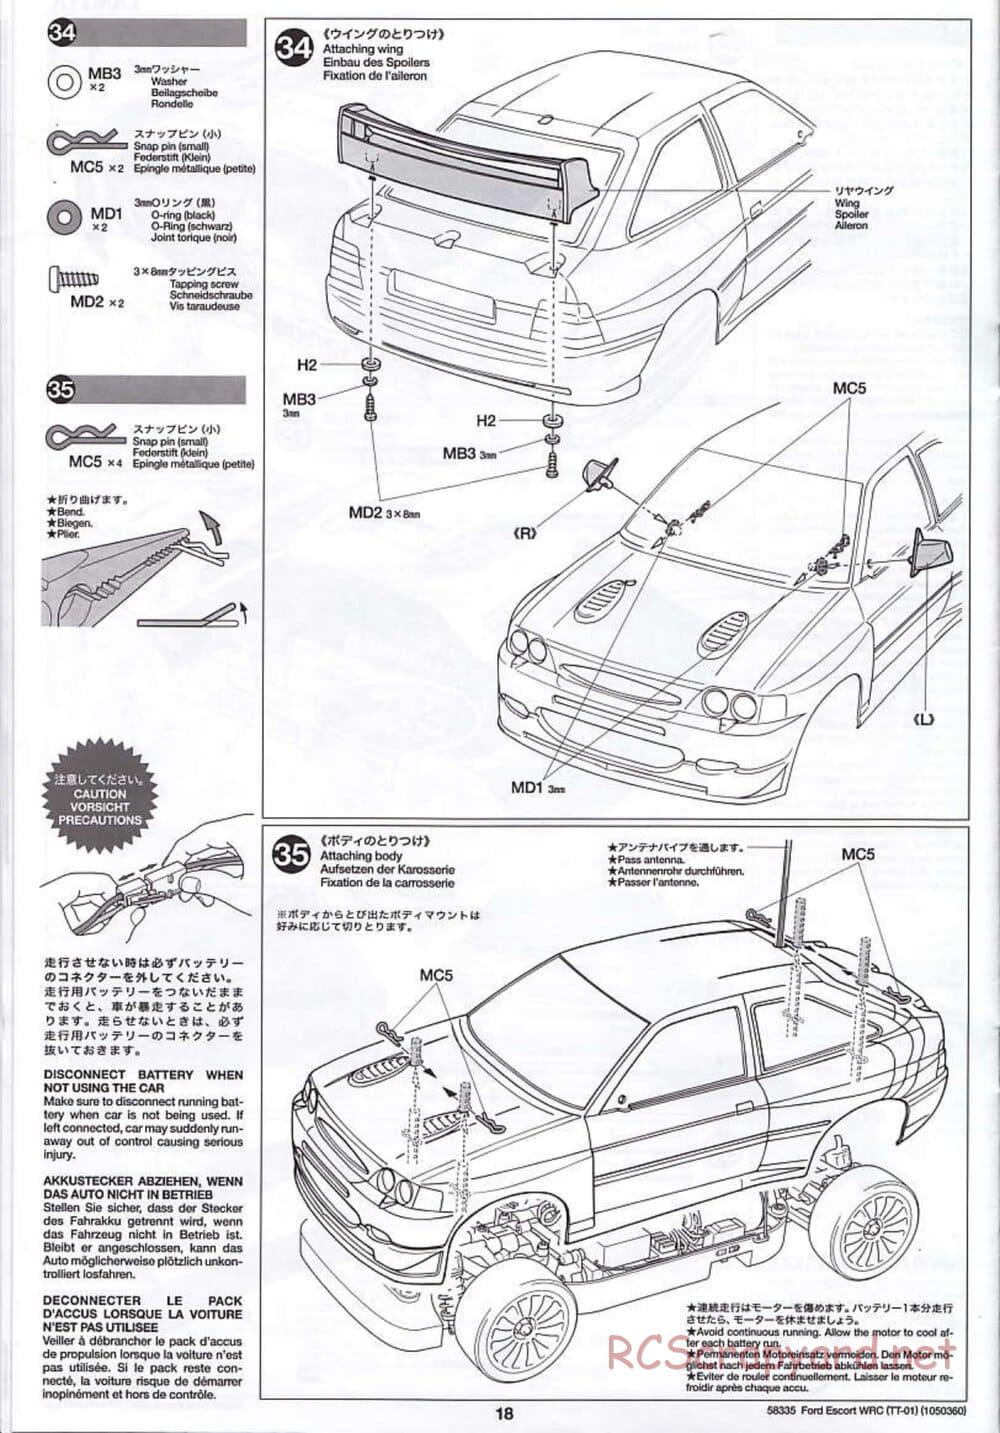 Tamiya - Ford Escort WRC - TT-01 Chassis - Manual - Page 18